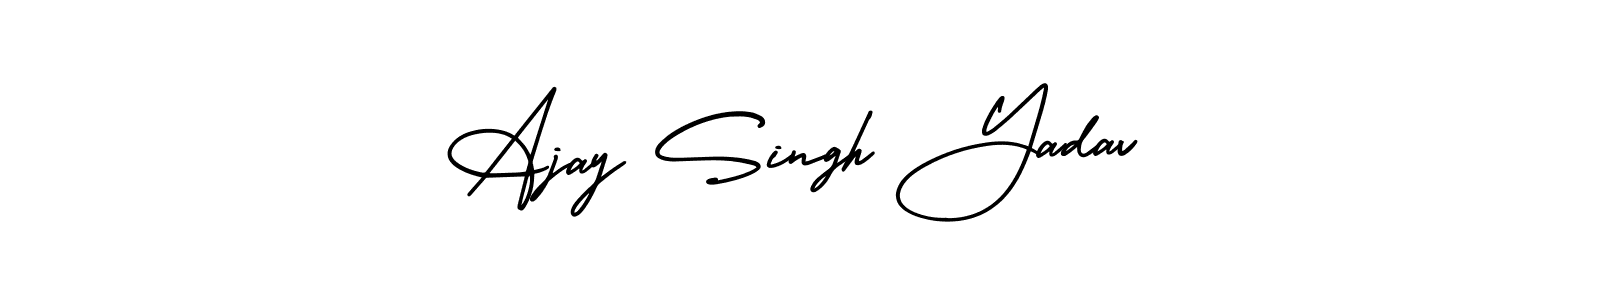 How to Draw Ajay Singh Yadav signature style? AmerikaSignatureDemo-Regular is a latest design signature styles for name Ajay Singh Yadav. Ajay Singh Yadav signature style 3 images and pictures png